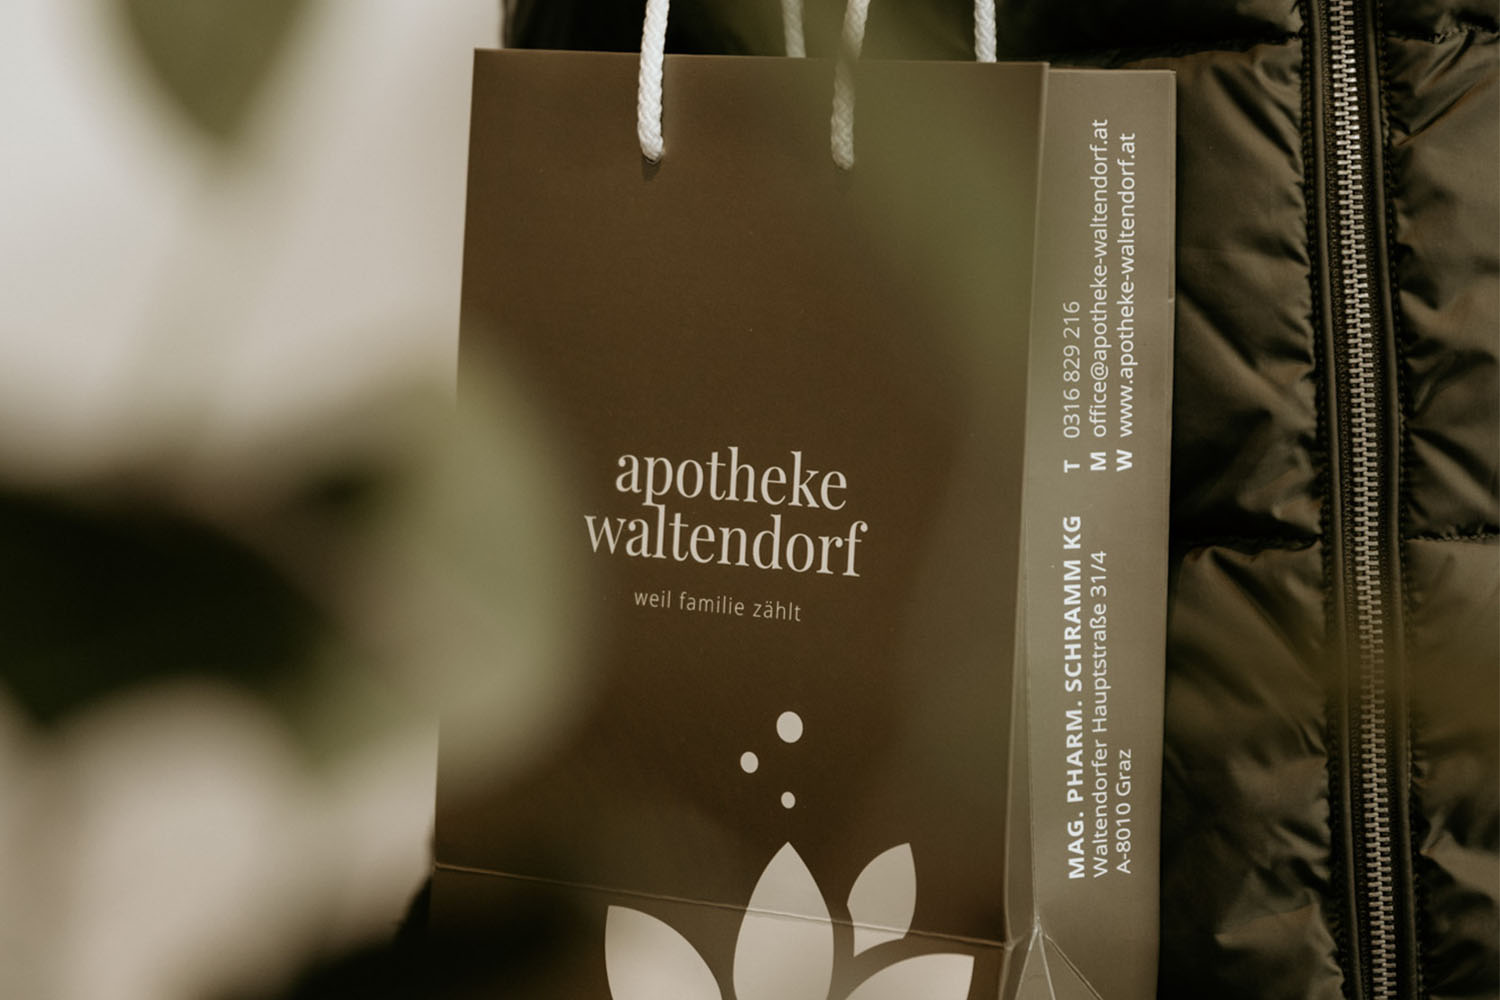 Apotheke Waltendorf / Branding / KWER